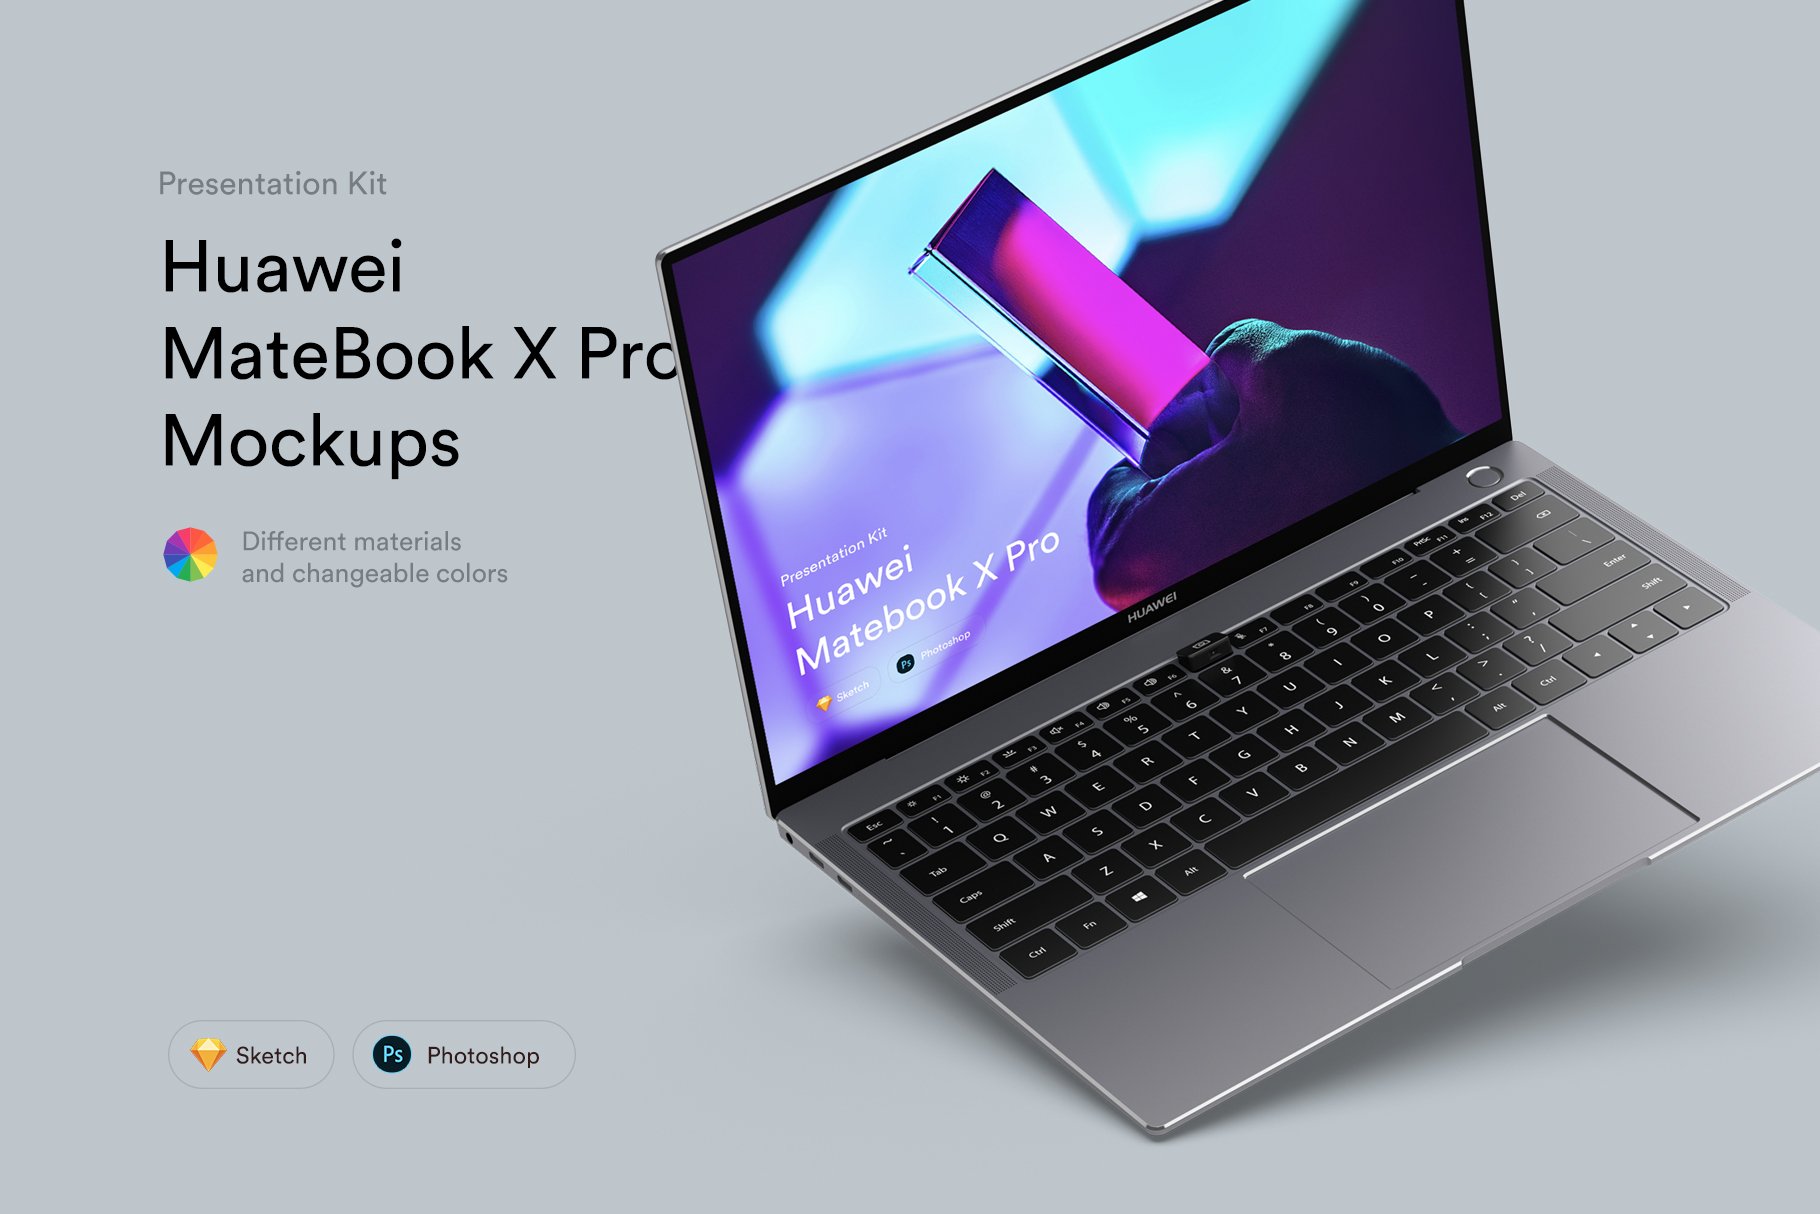 MateBook X Pro Mockups | PK cover image.